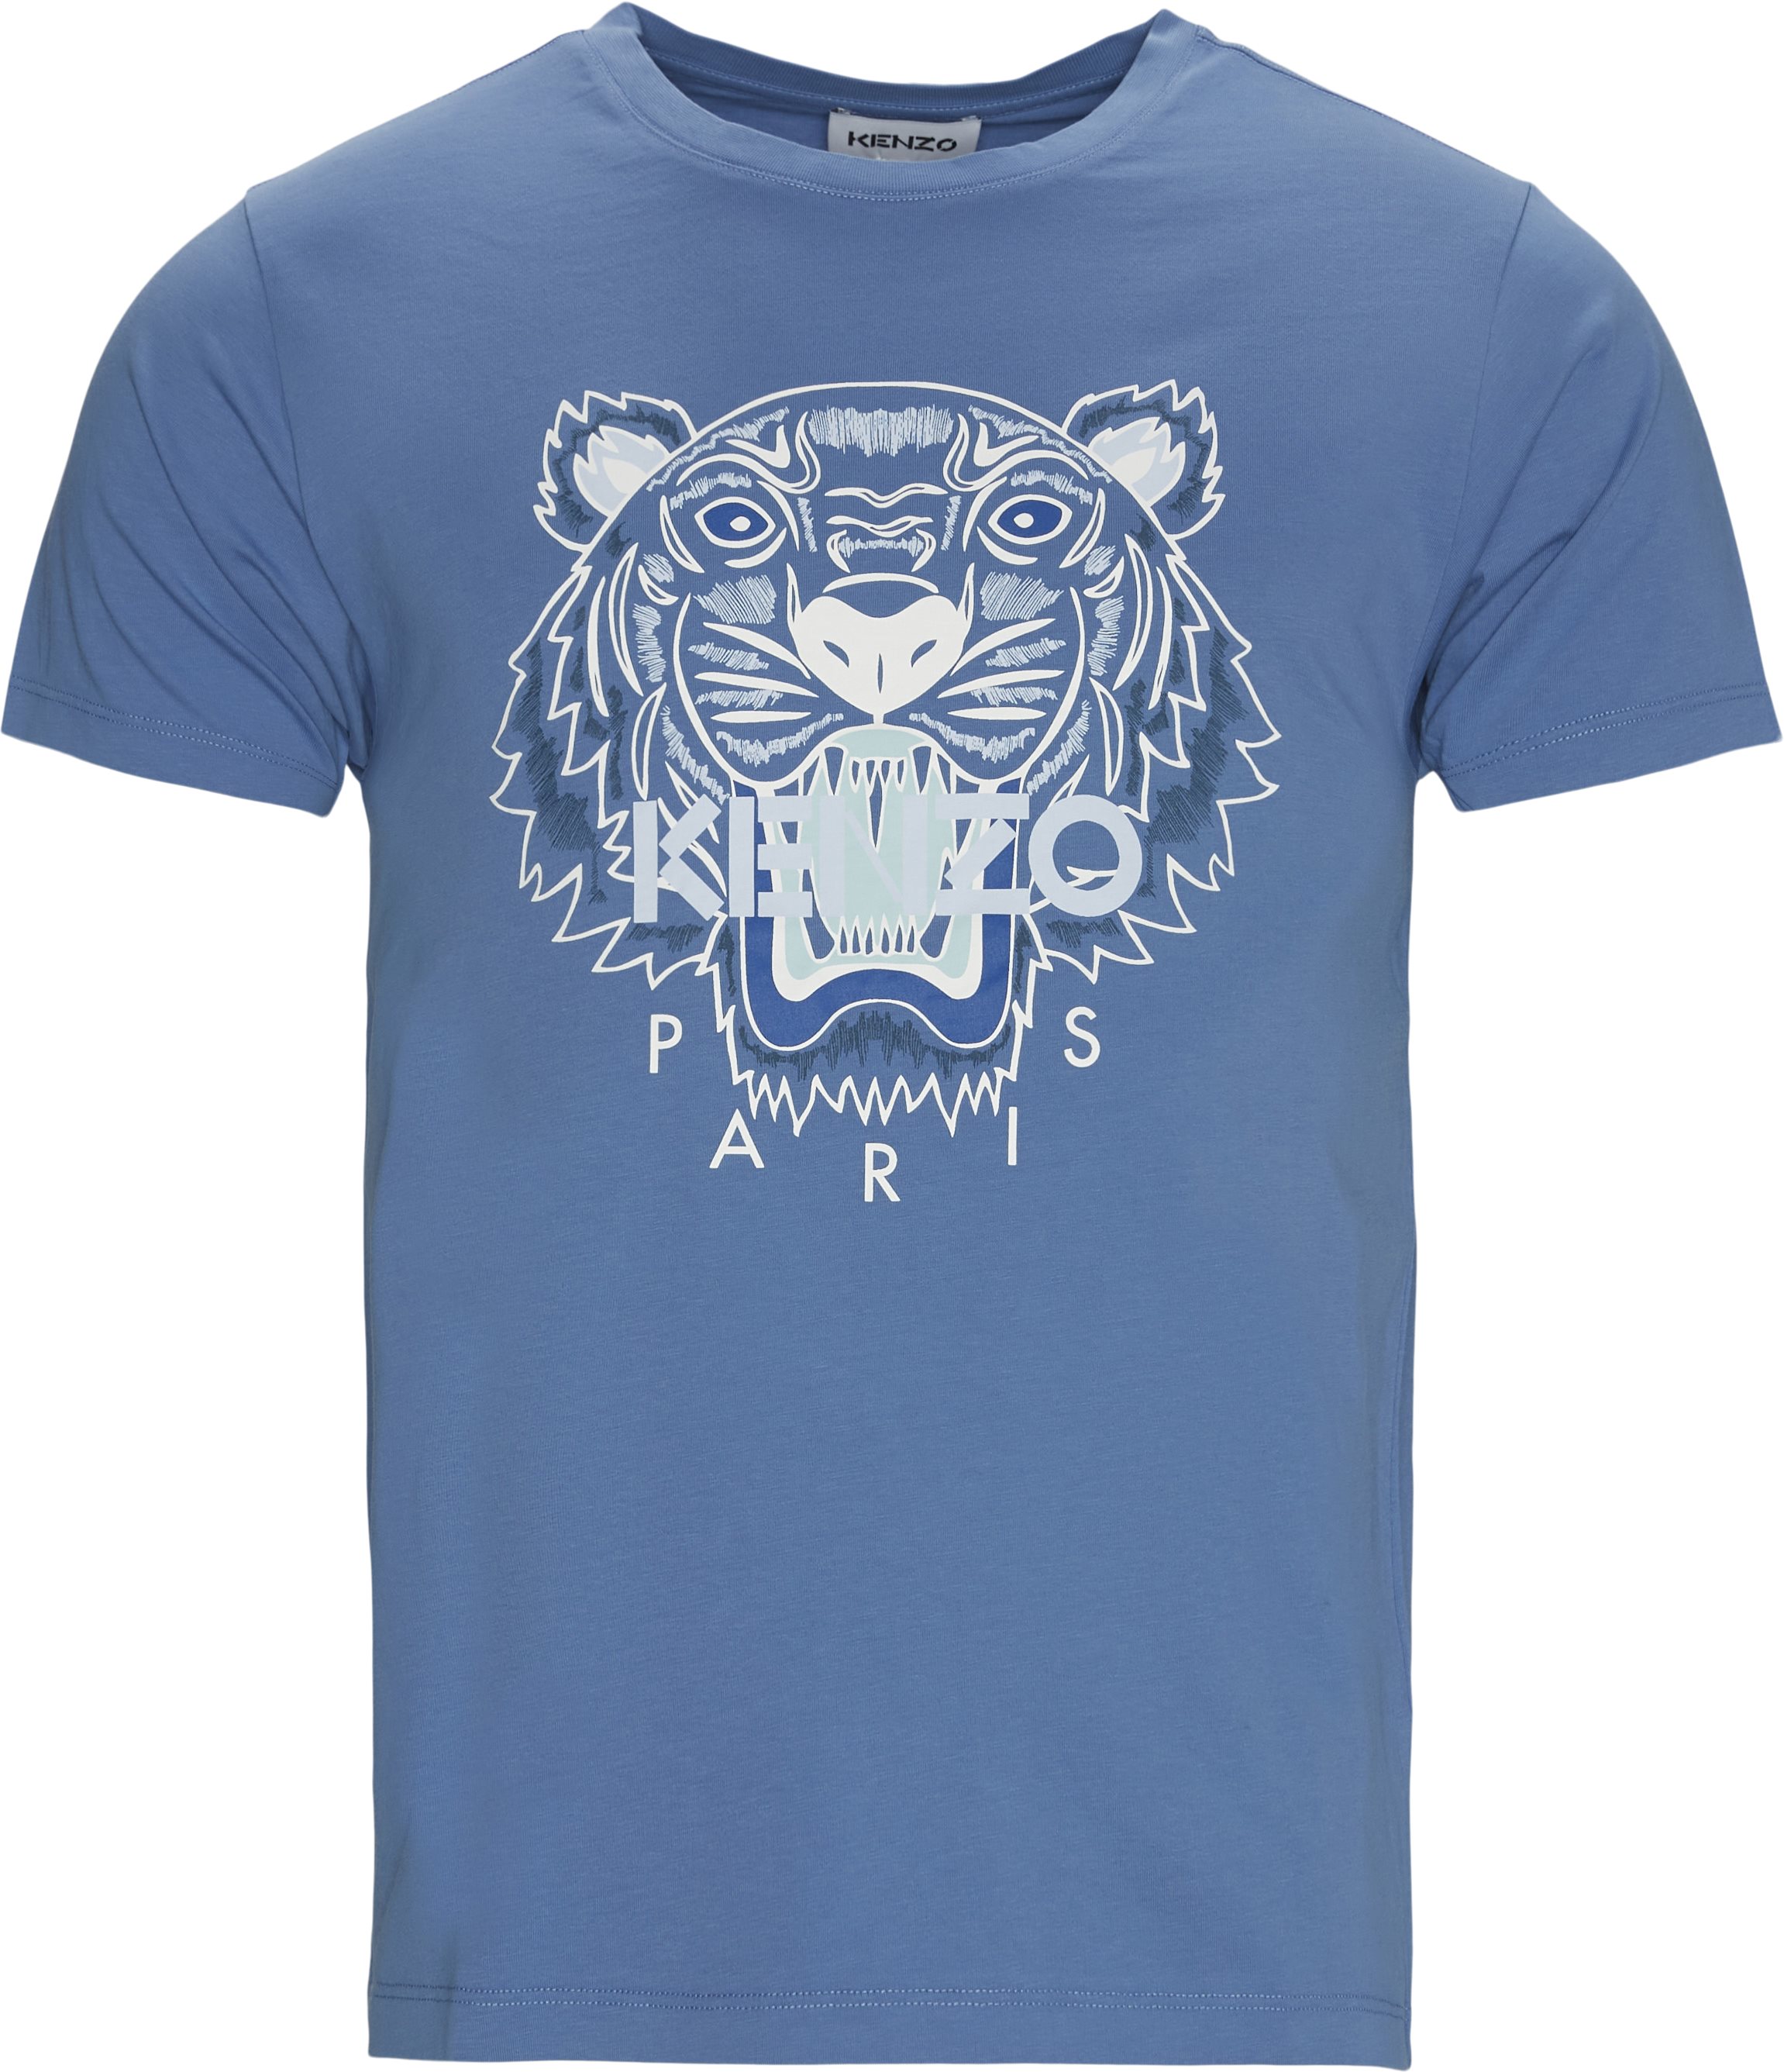 Iconic Logo Tee - T-shirts - Regular fit - Blue